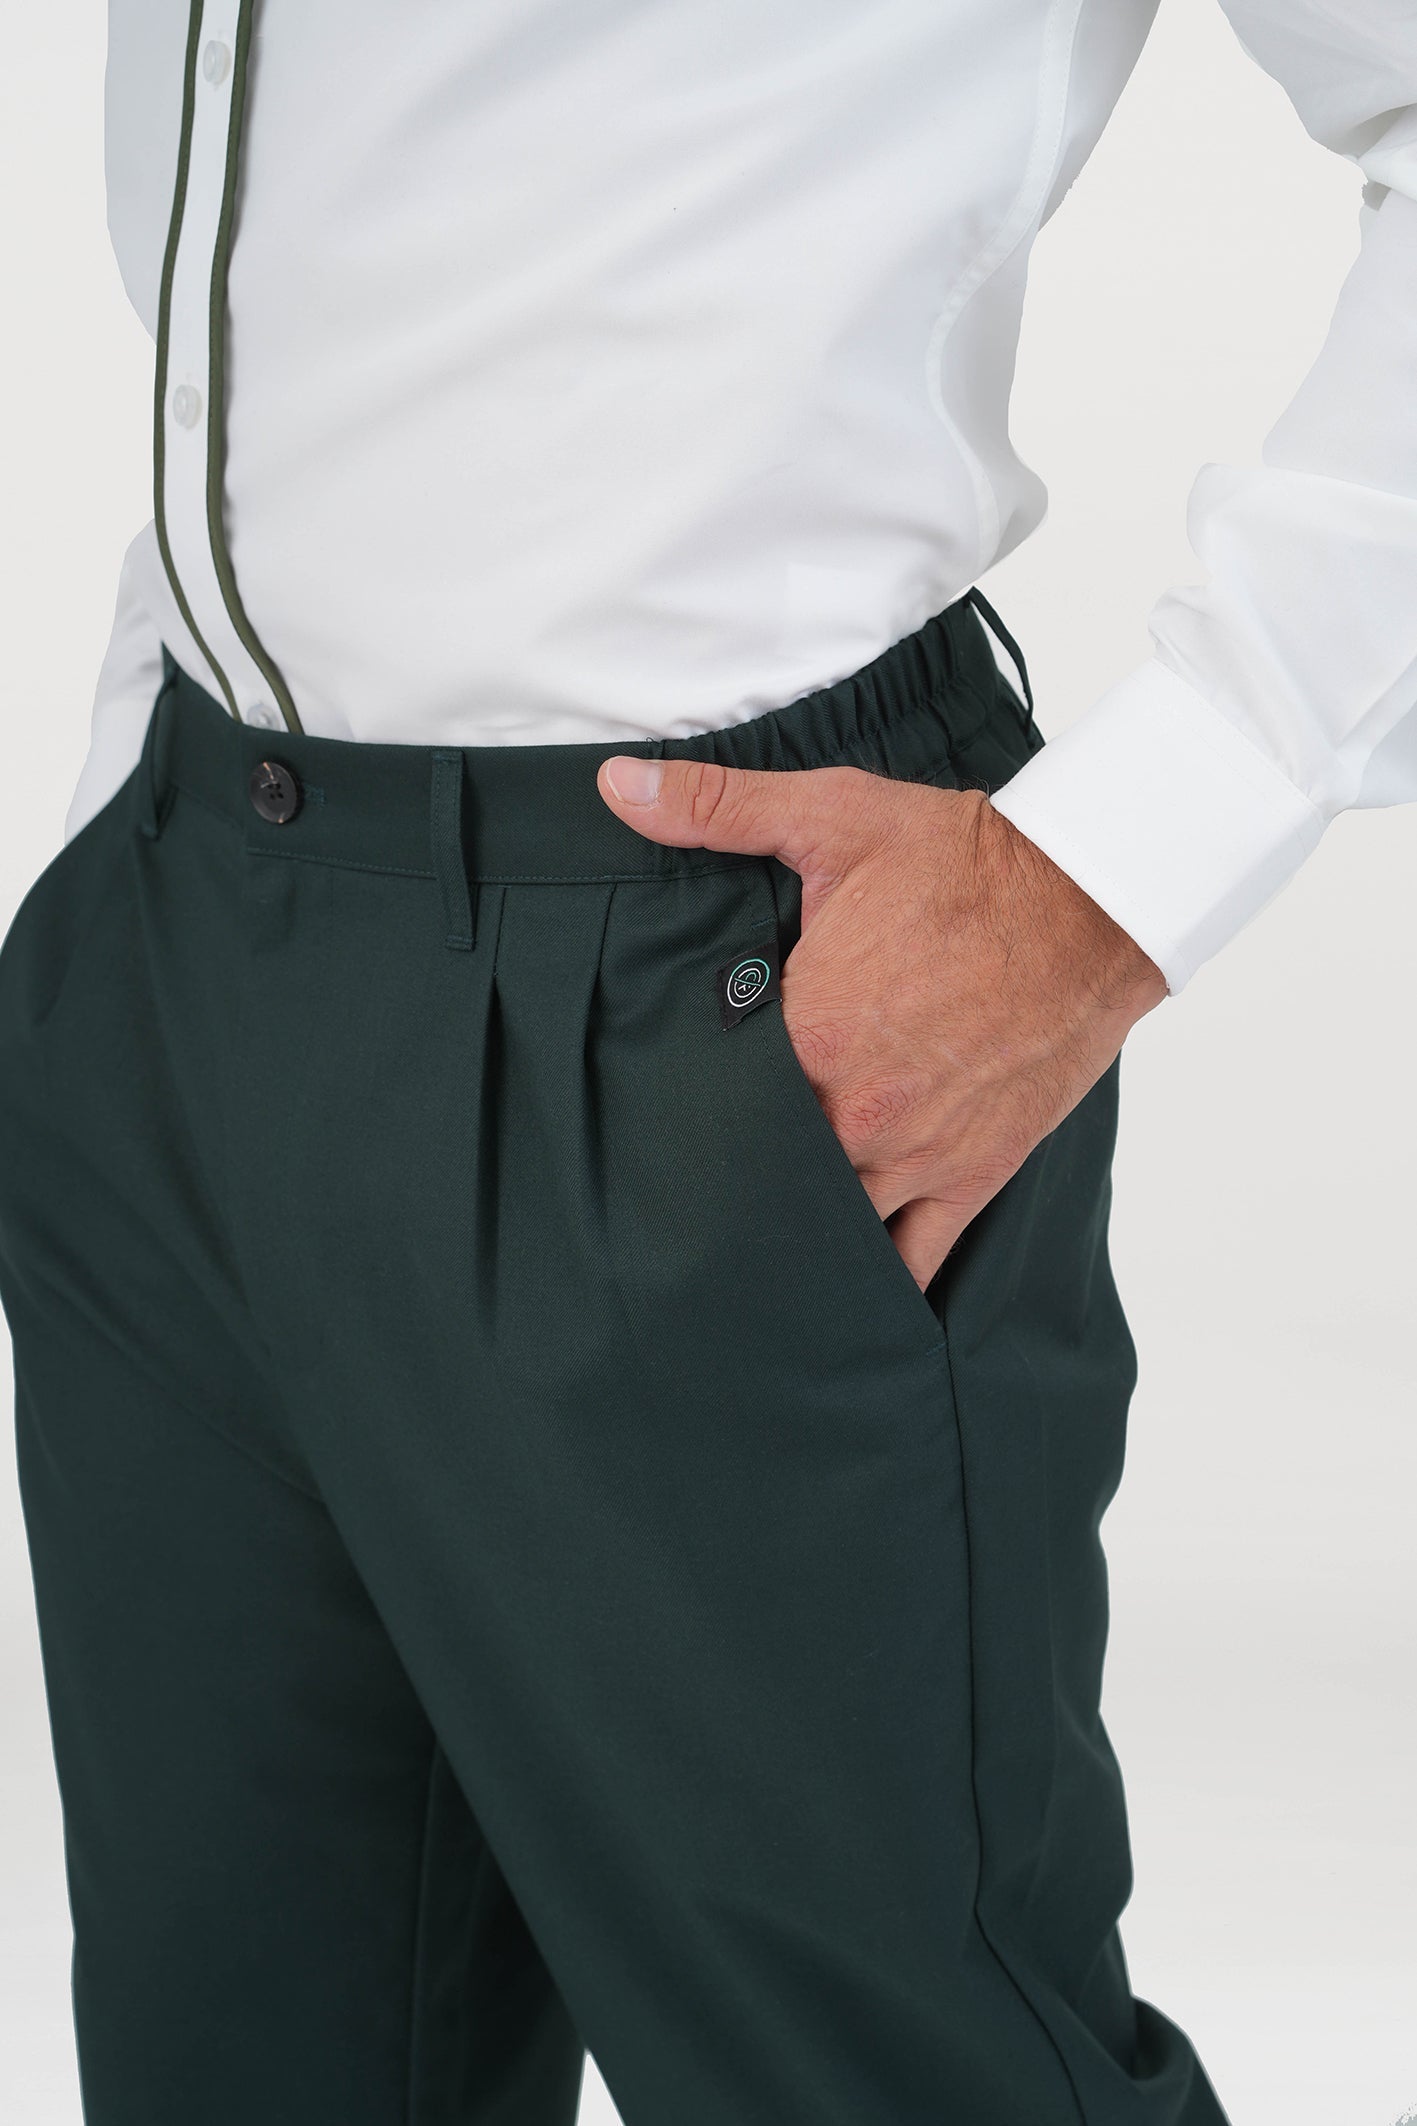 Men's BioNTex™ Pleated Elastic Waist Formal Pants